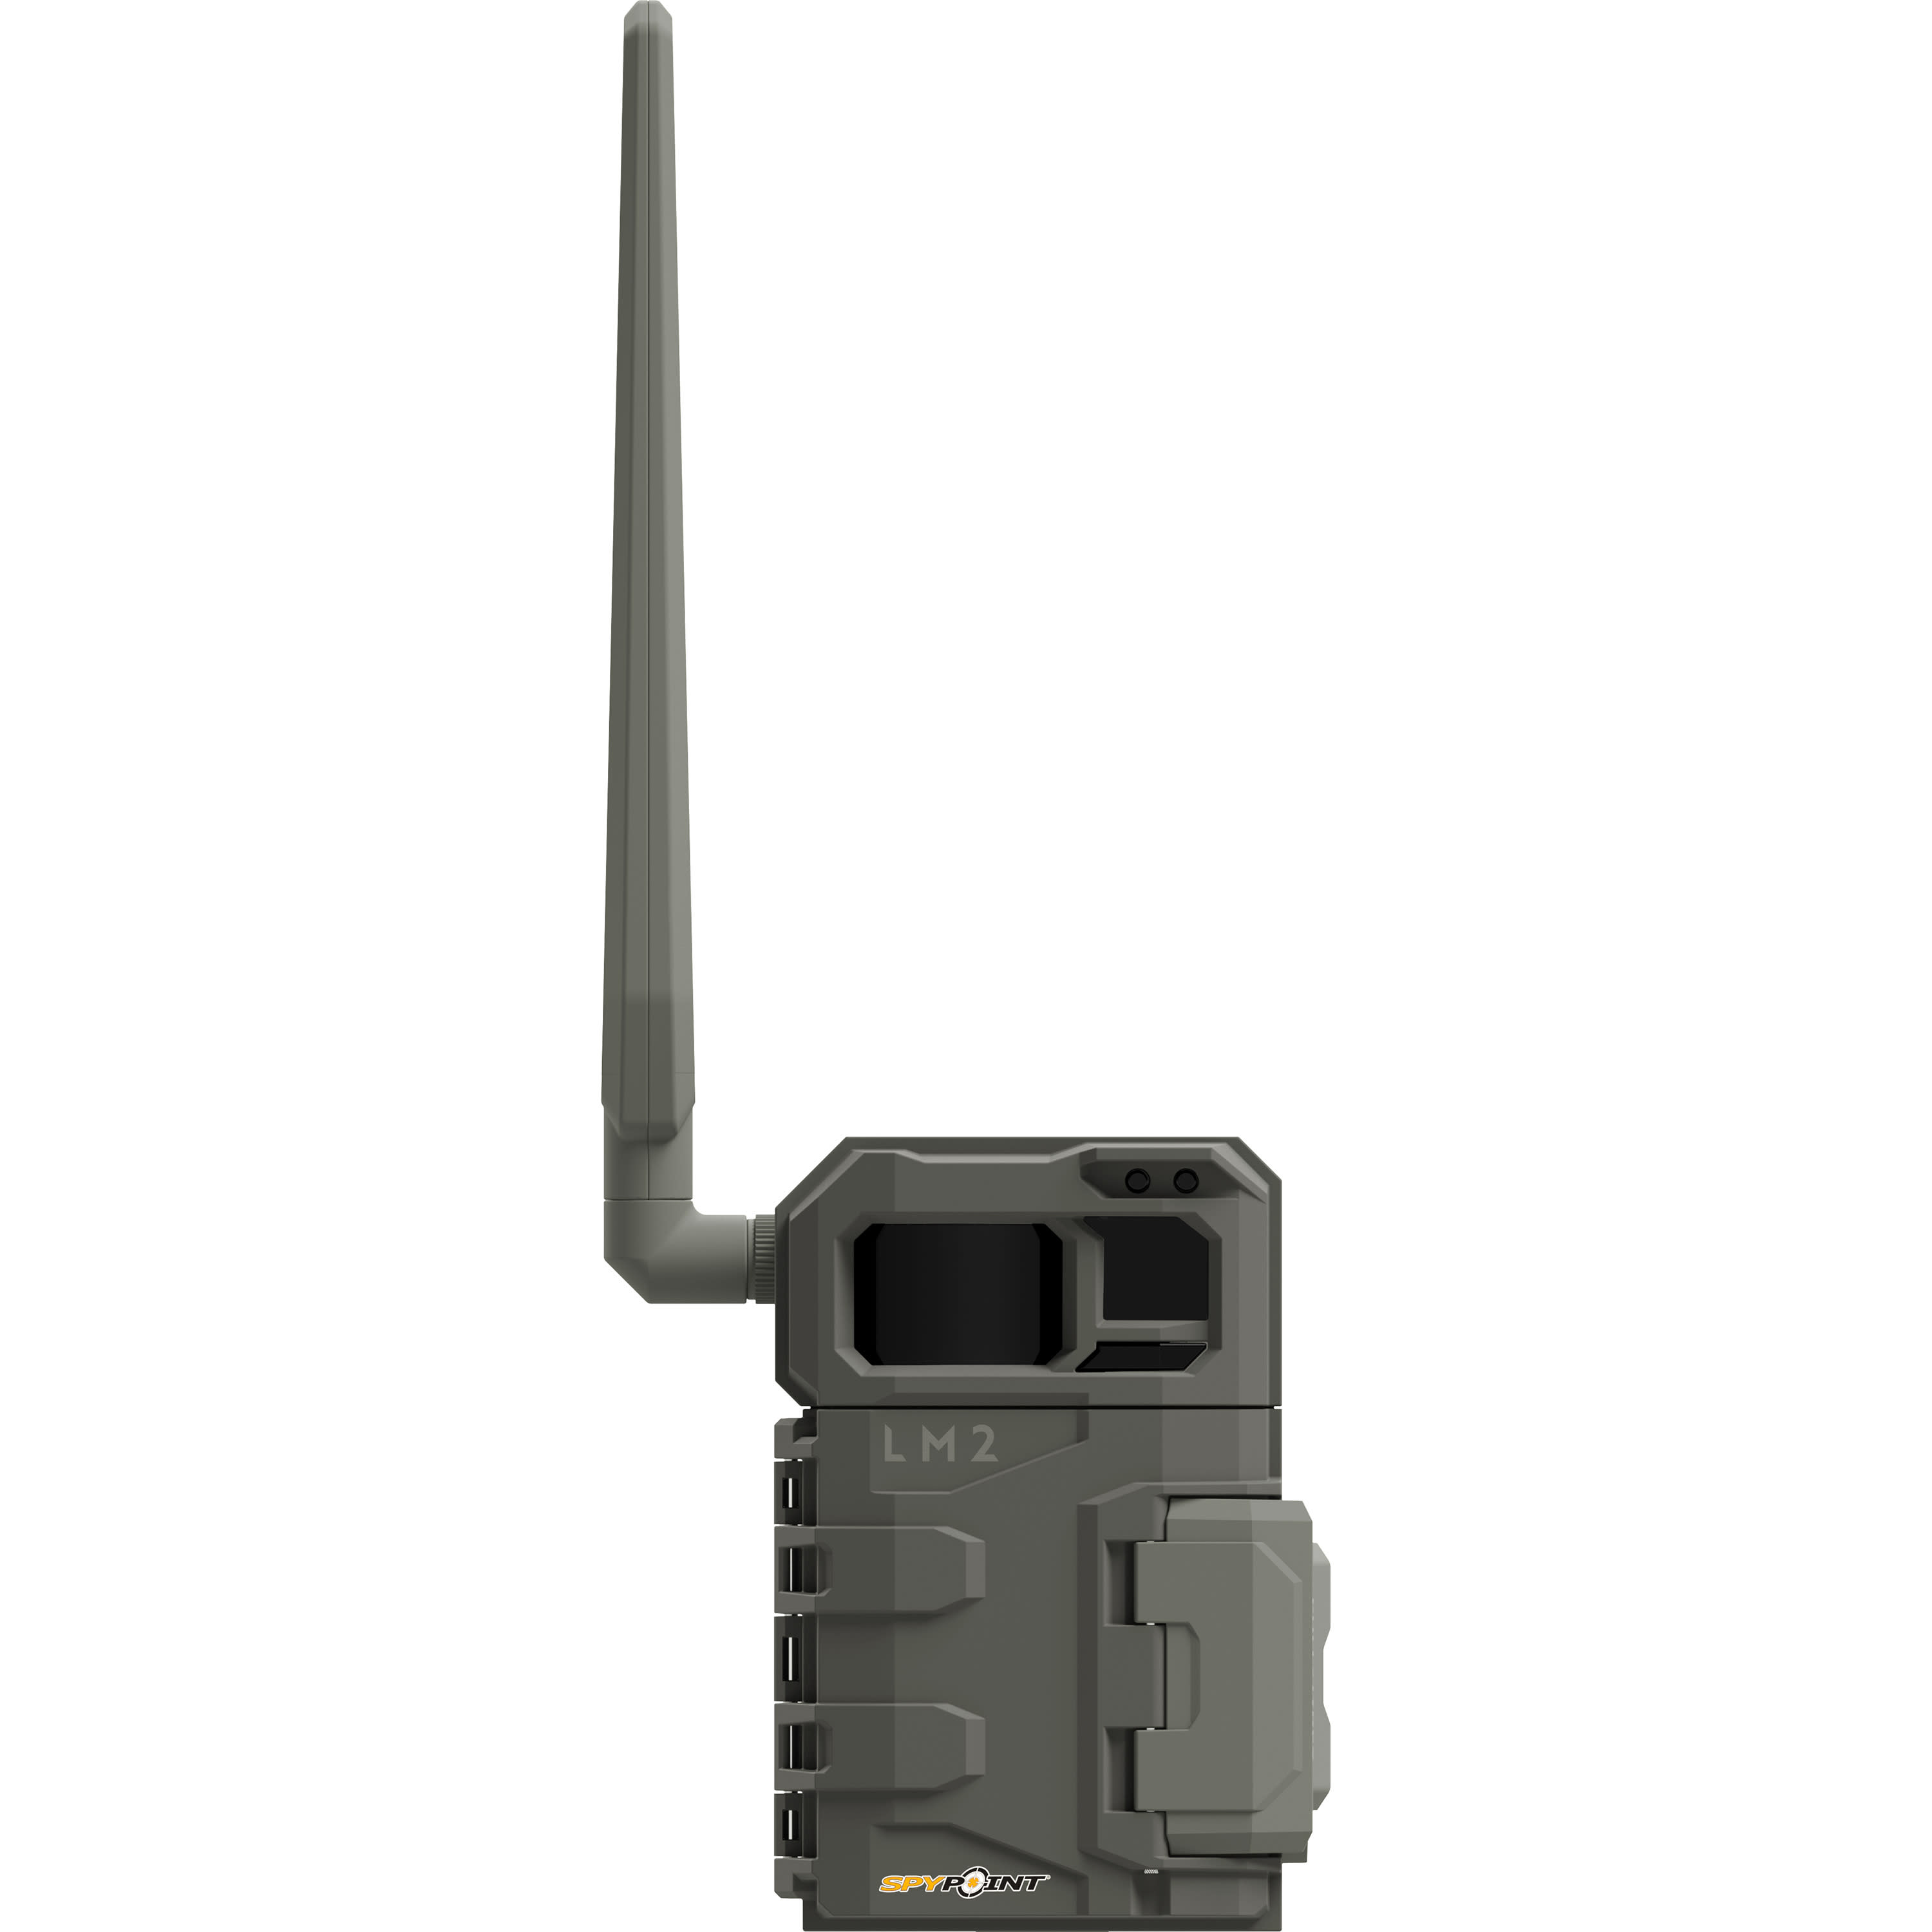 SPYPOINT® LM2 Cellular Trail Camera